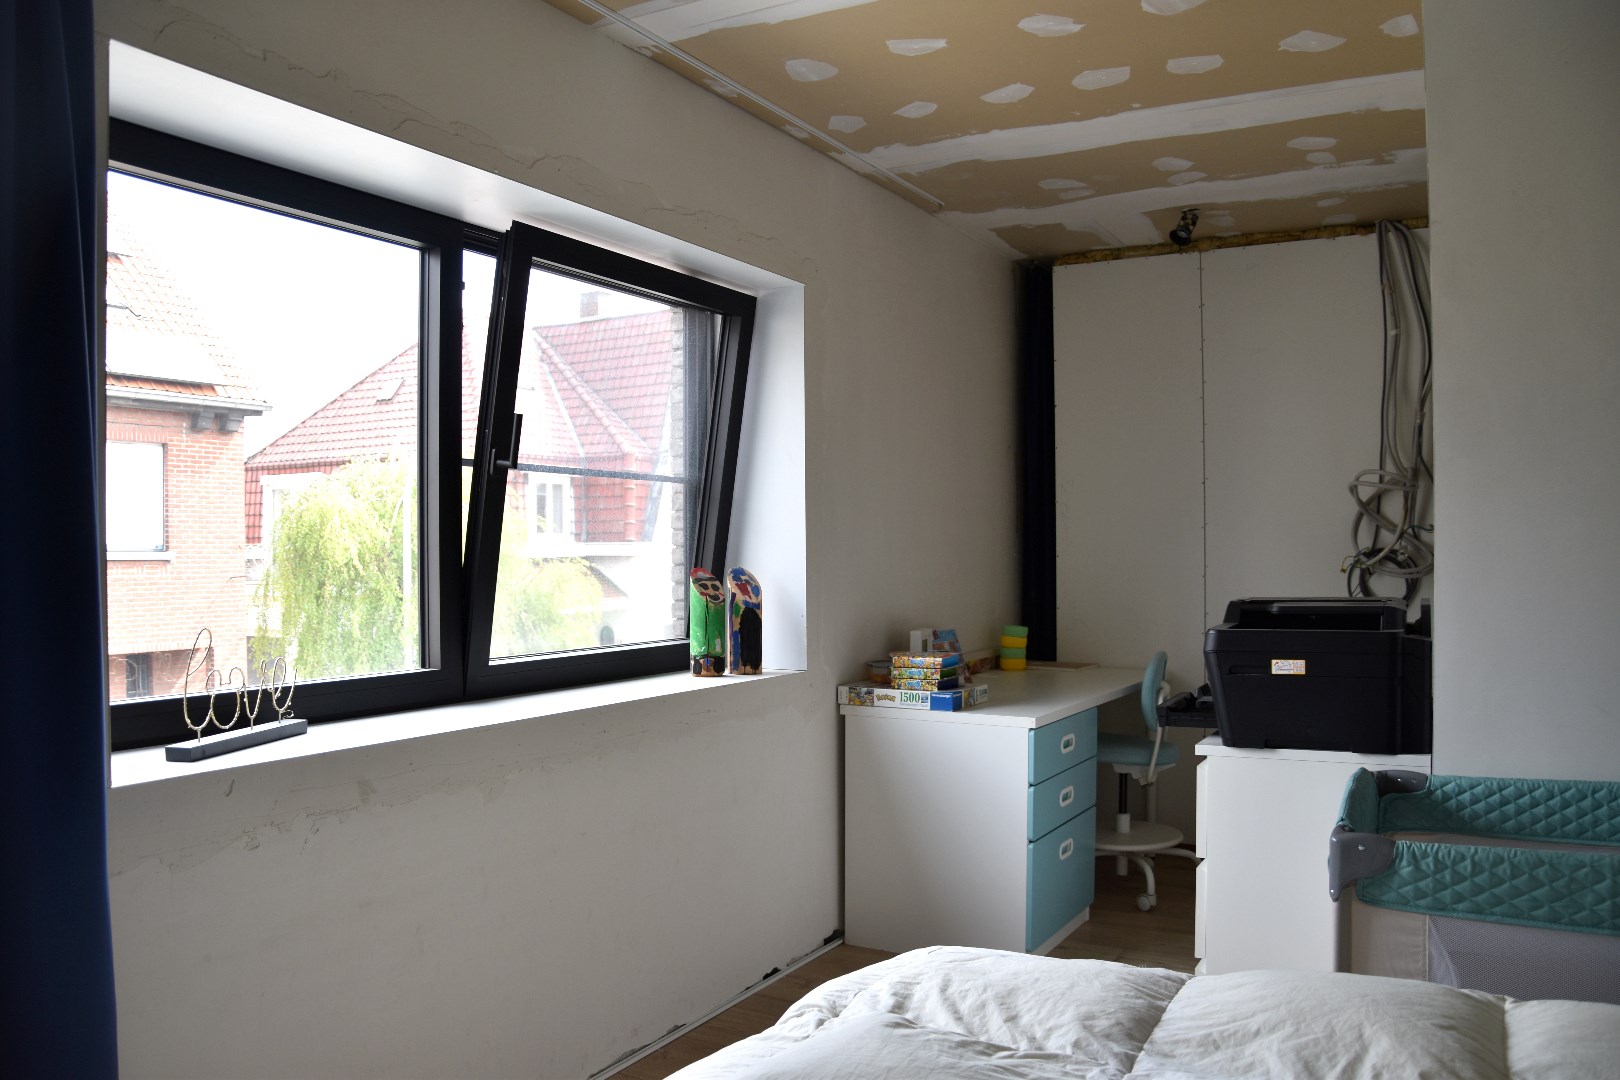 Gezinswoning met 4 slaapkamers, garage en grote zonnige tuin te koop in Rollegem foto 12